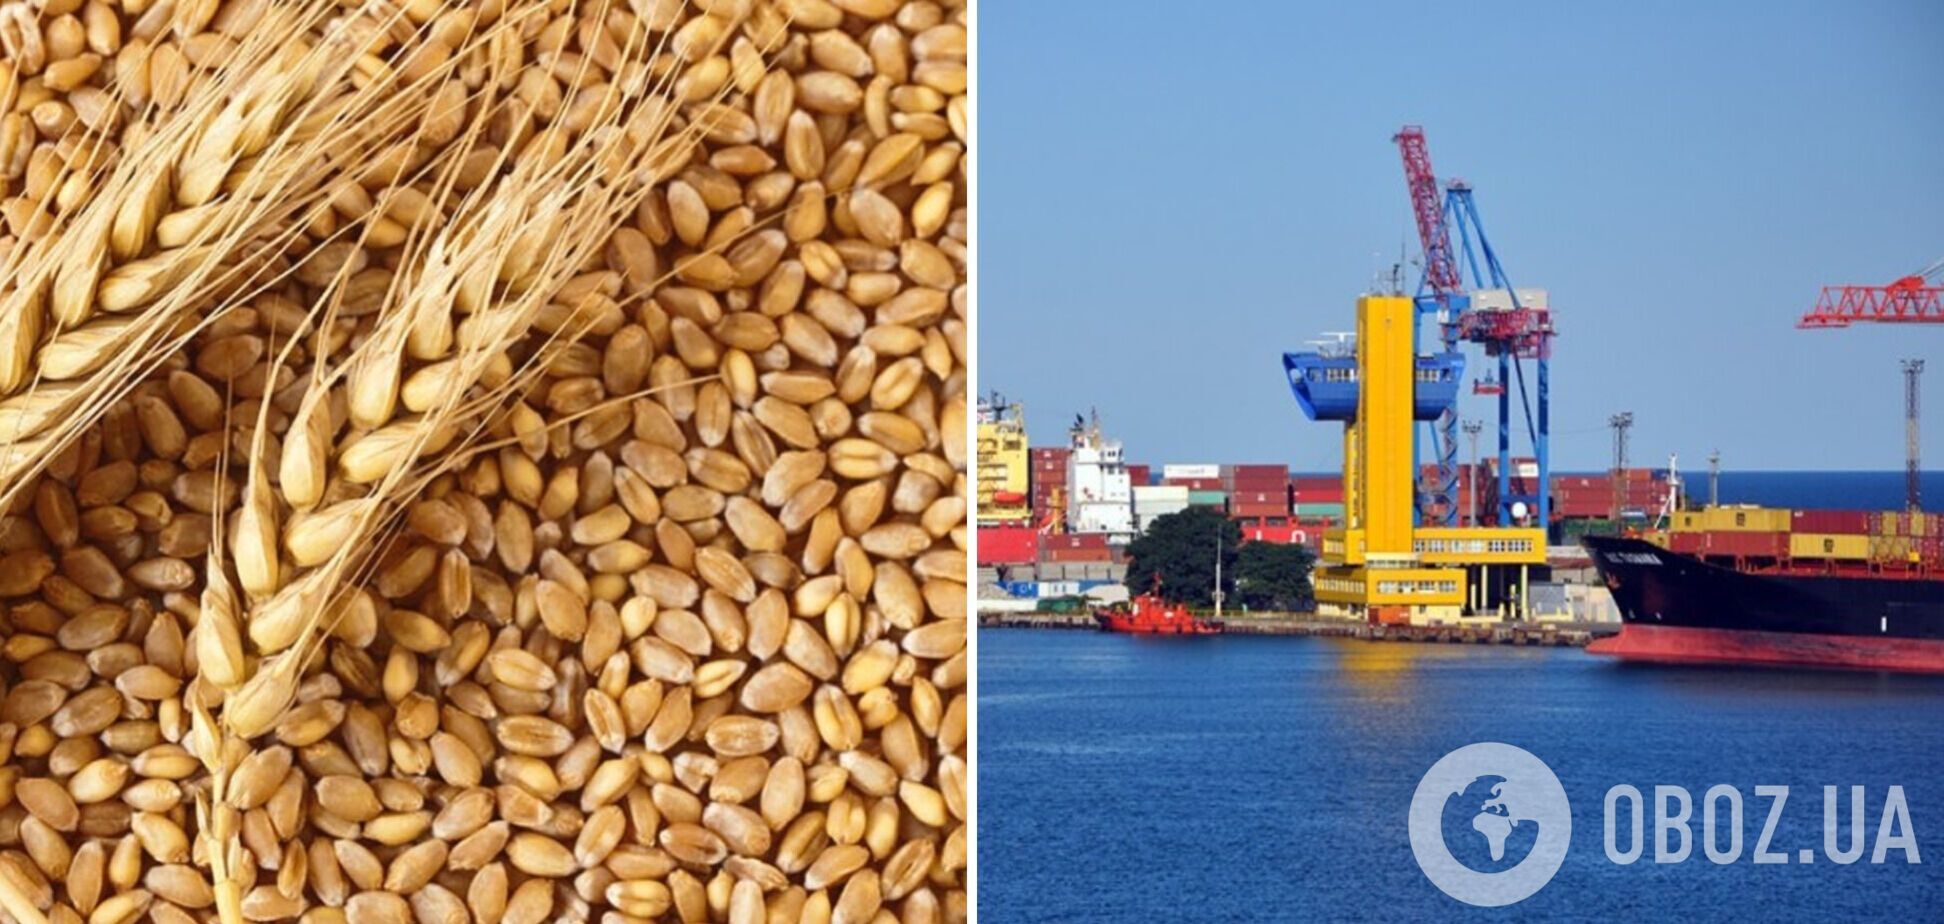 Експорт українського зерна розпочався